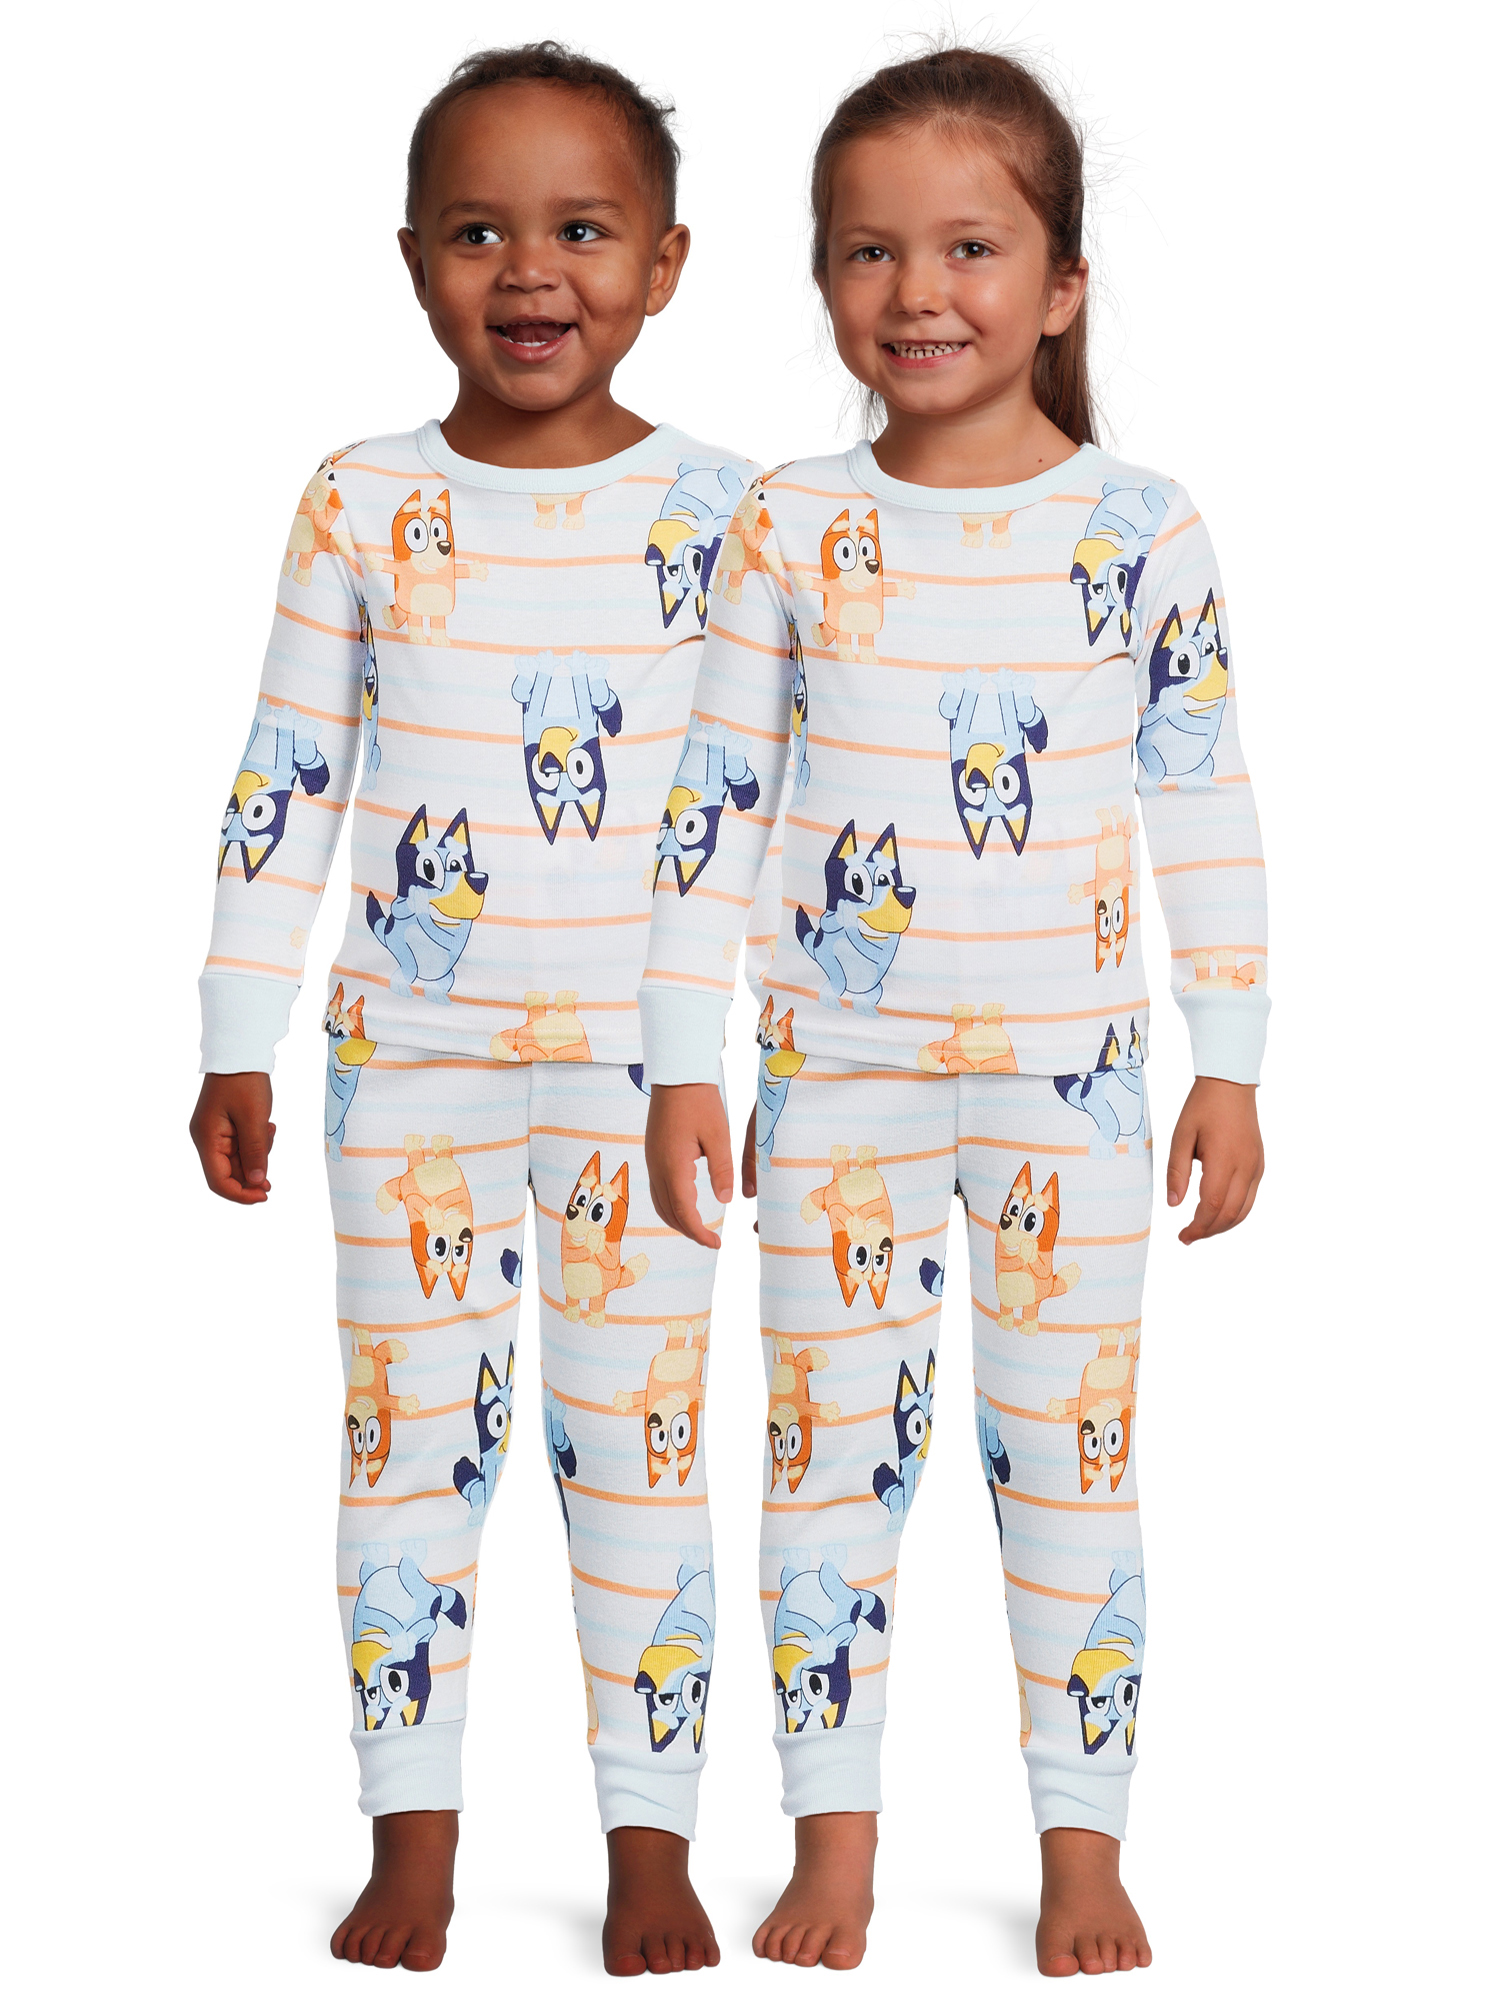 Bluey Toddler Unisex Long Sleeve Top and Pants, 2-Piece Pajama Set, Sizes 12M-5T - image 1 of 9